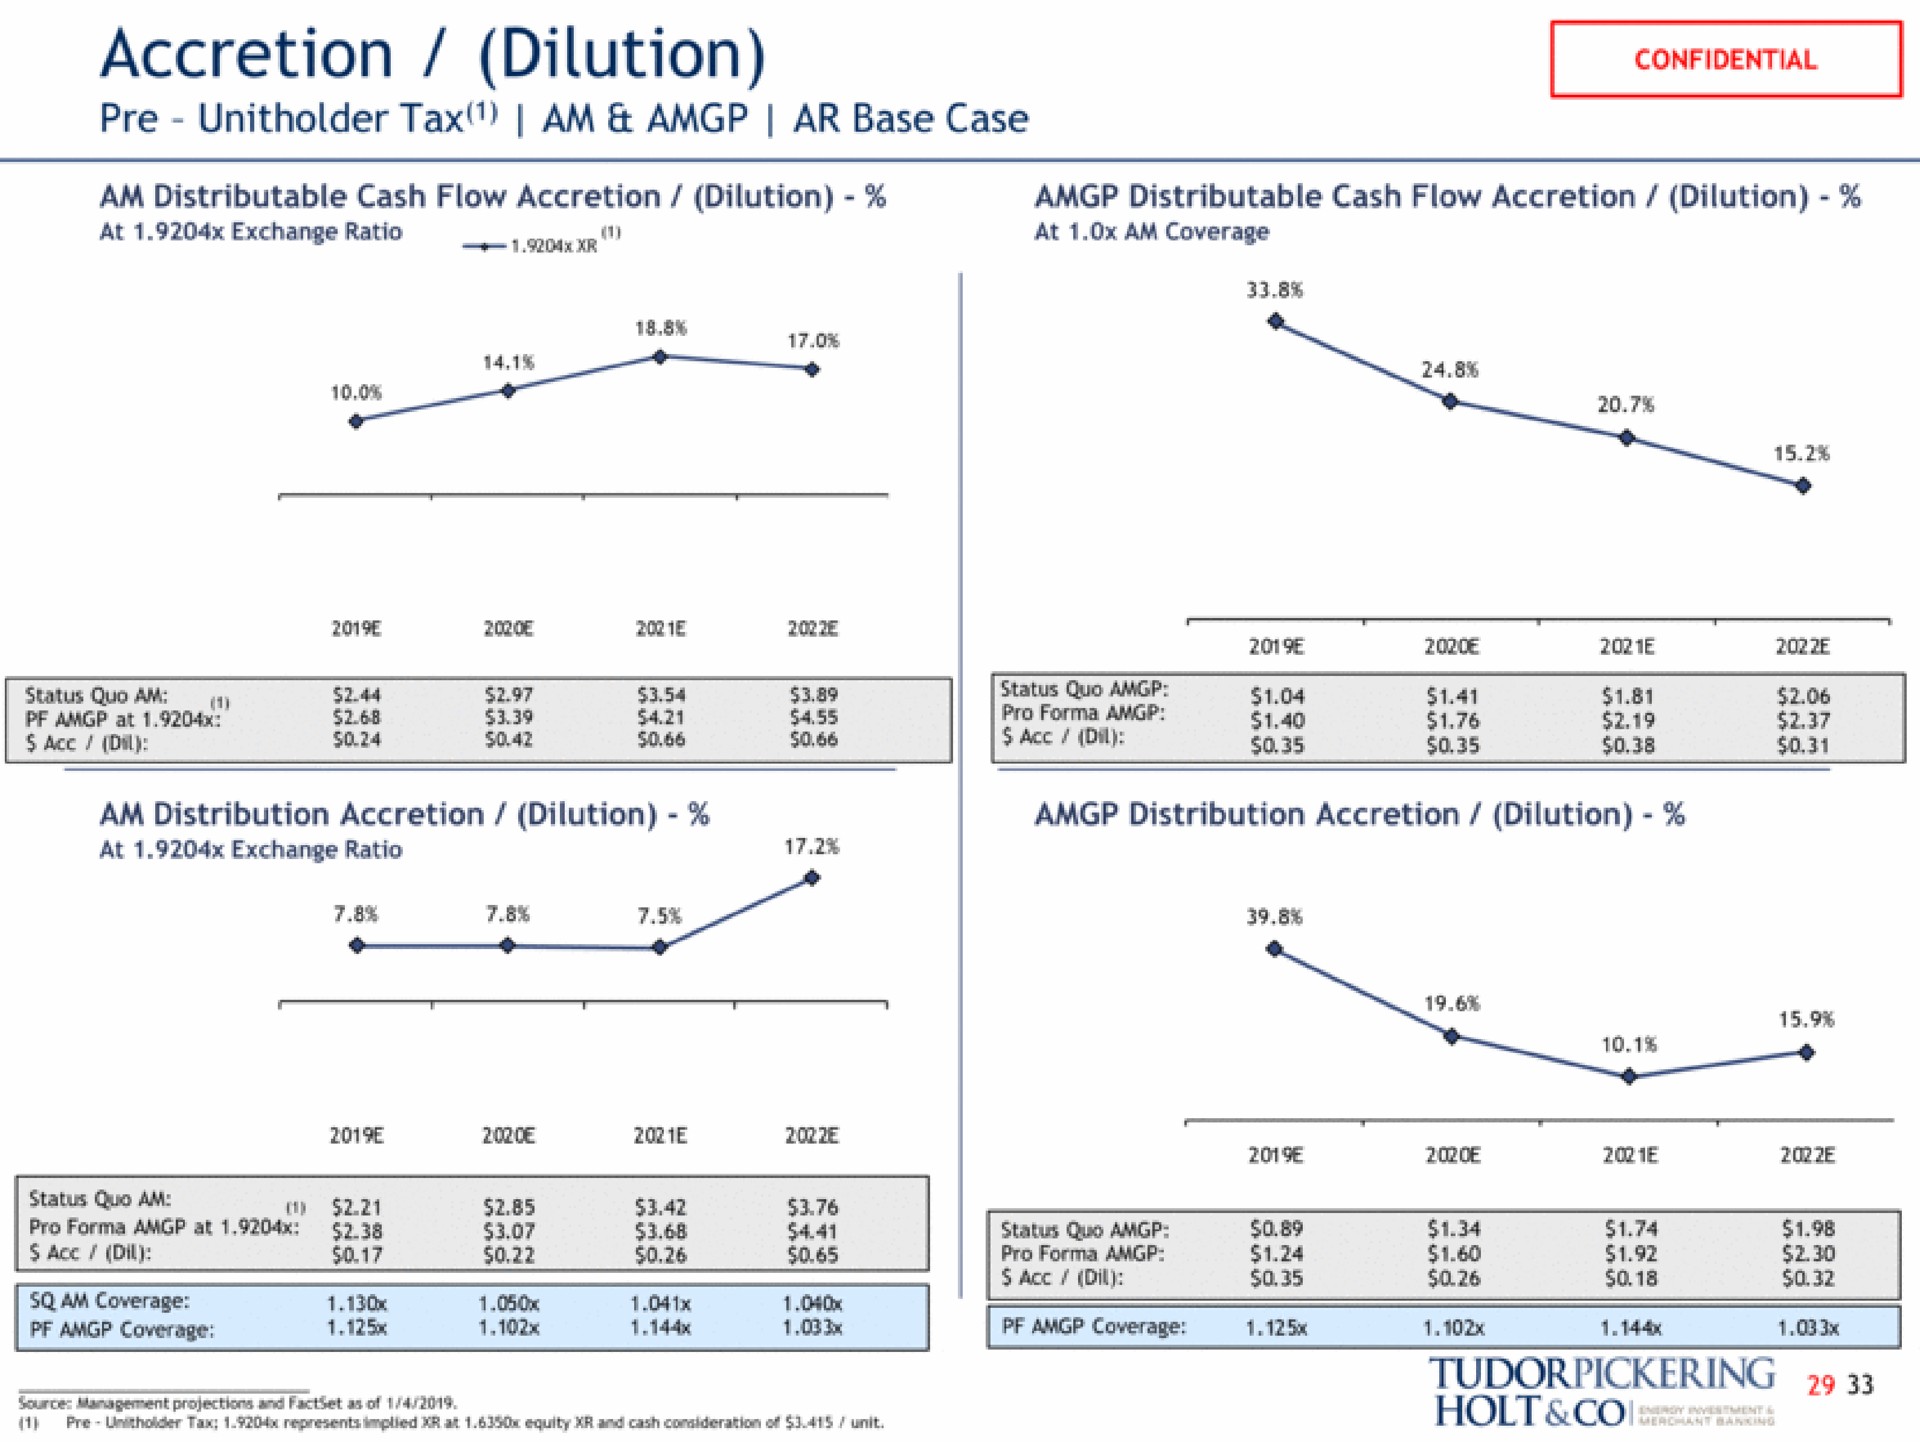 accretion dilution tax am base case son | Tudor, Pickering, Holt & Co